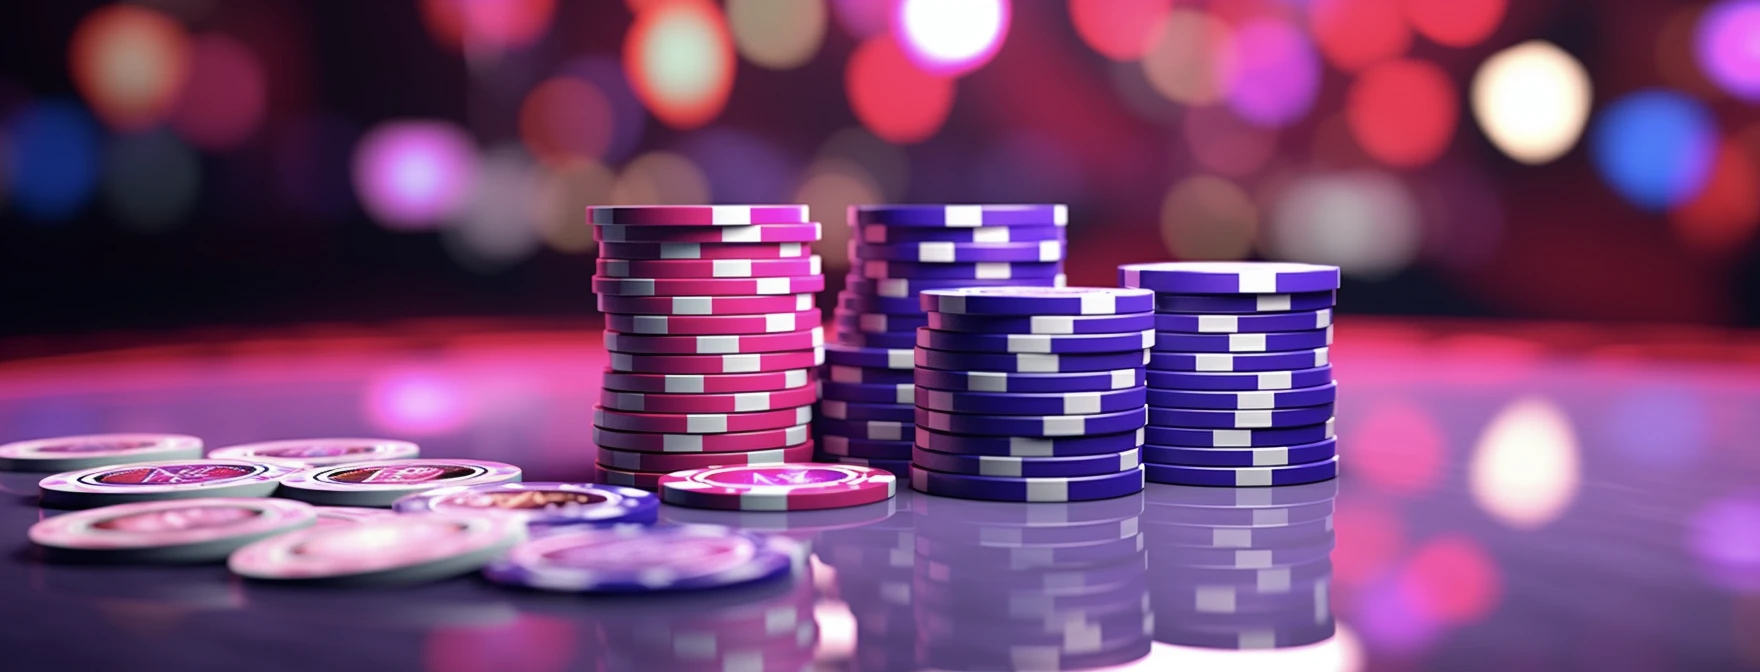 Stake casino image